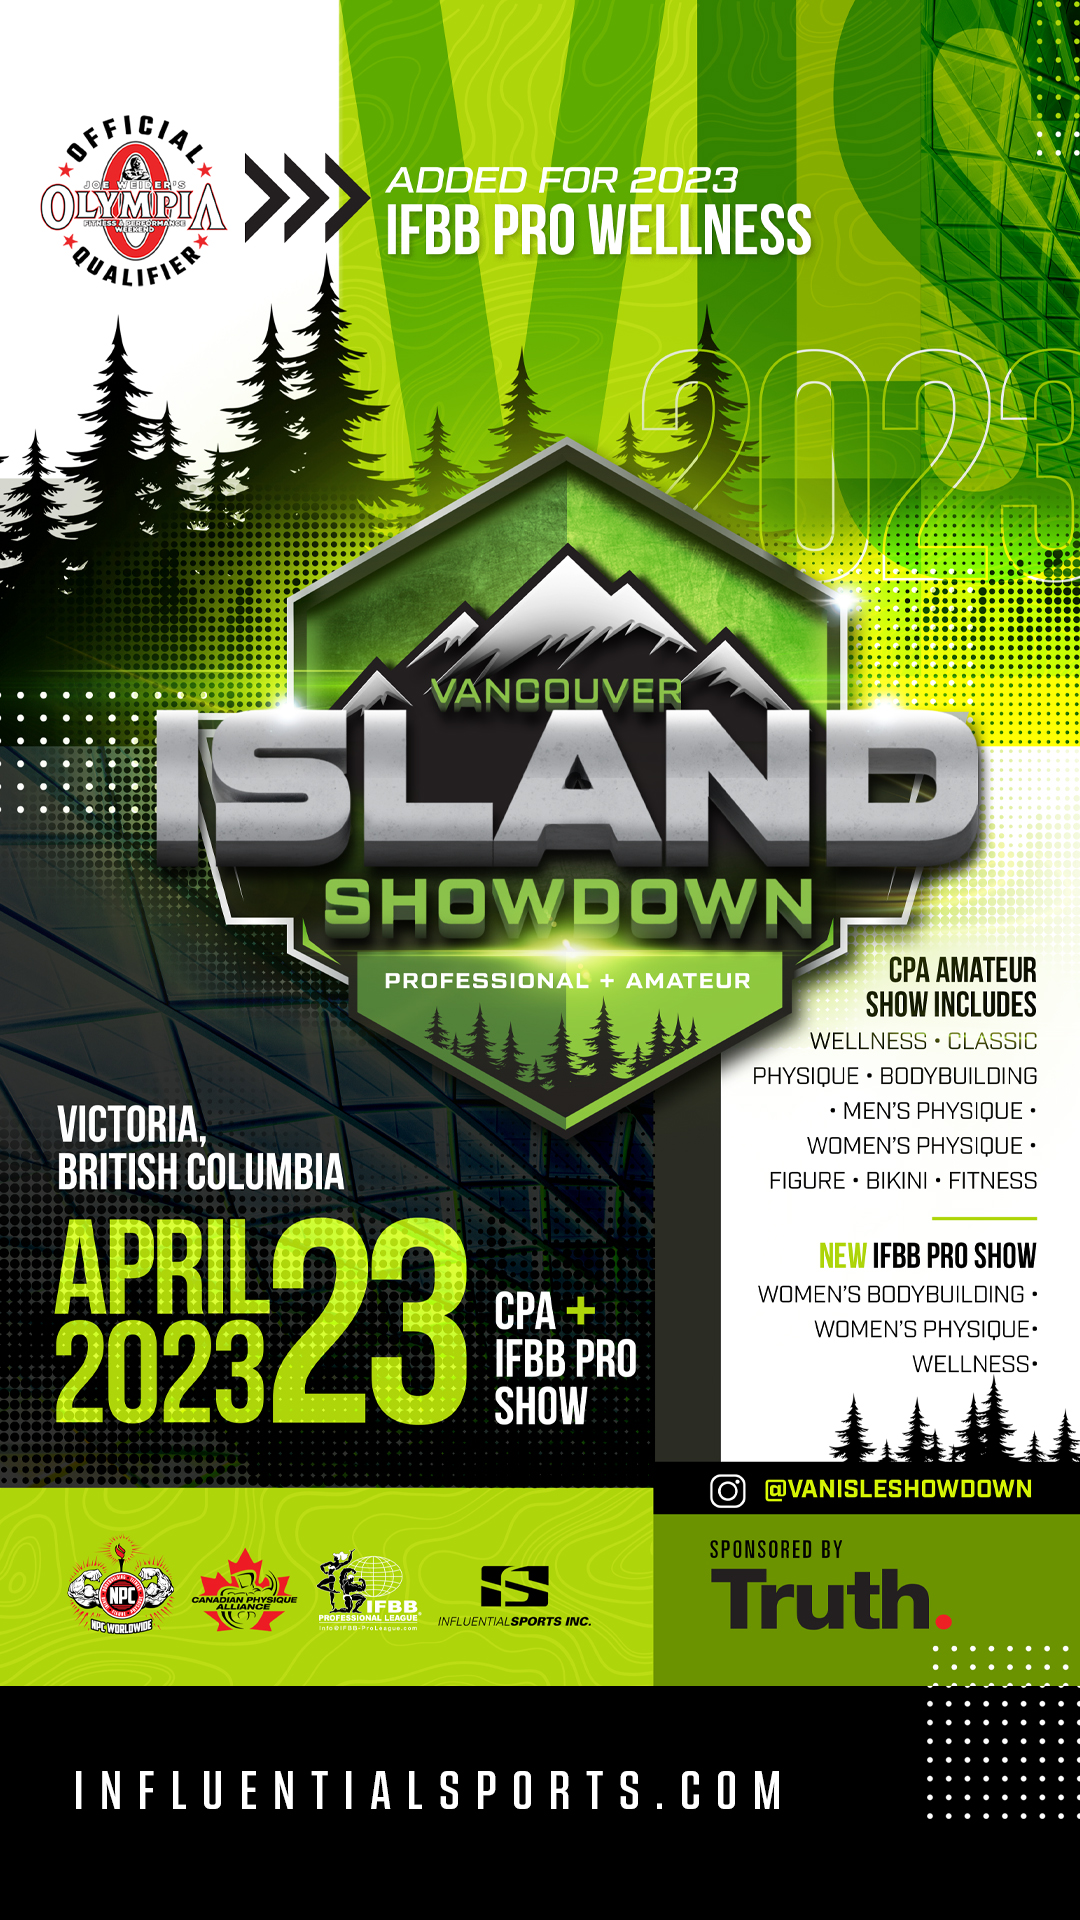 2023 Vancouver Island Showdown Mobile Version